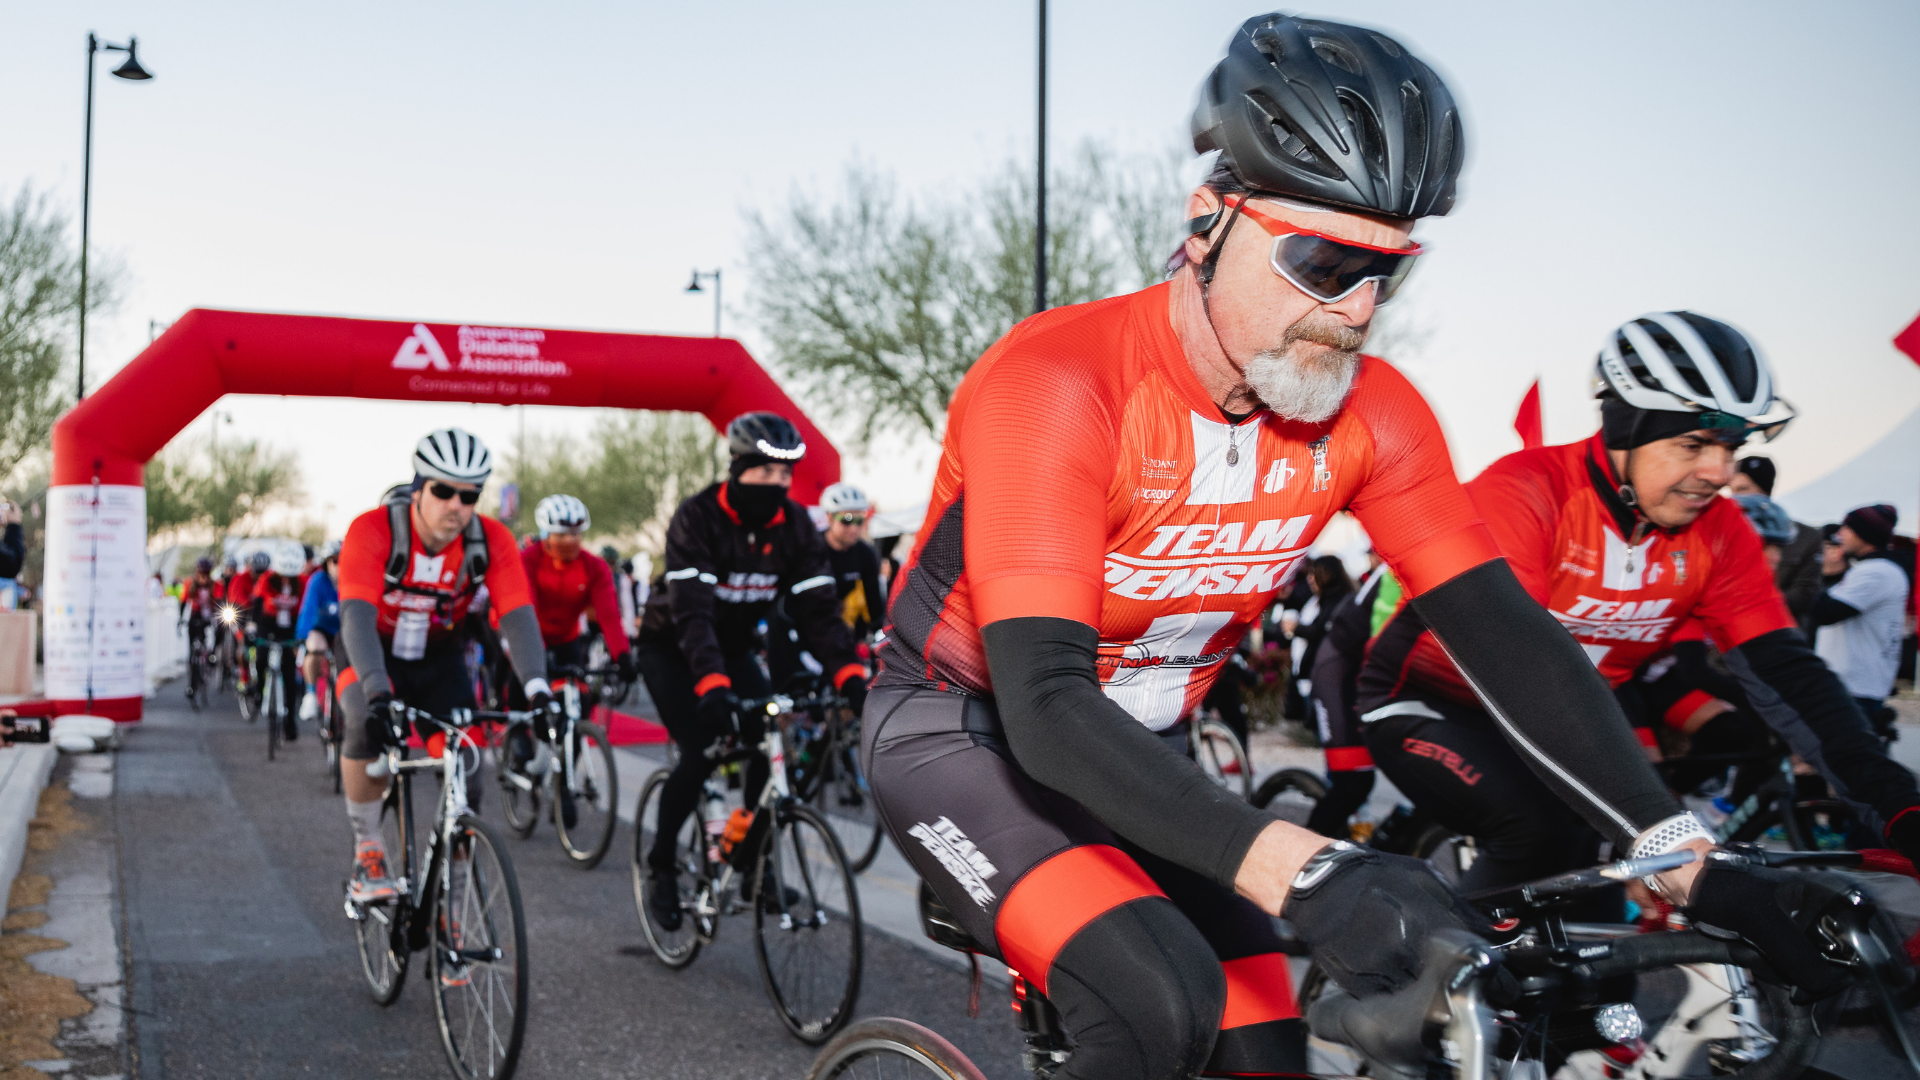 Bikers at Arizona 56 tour de cure bike race